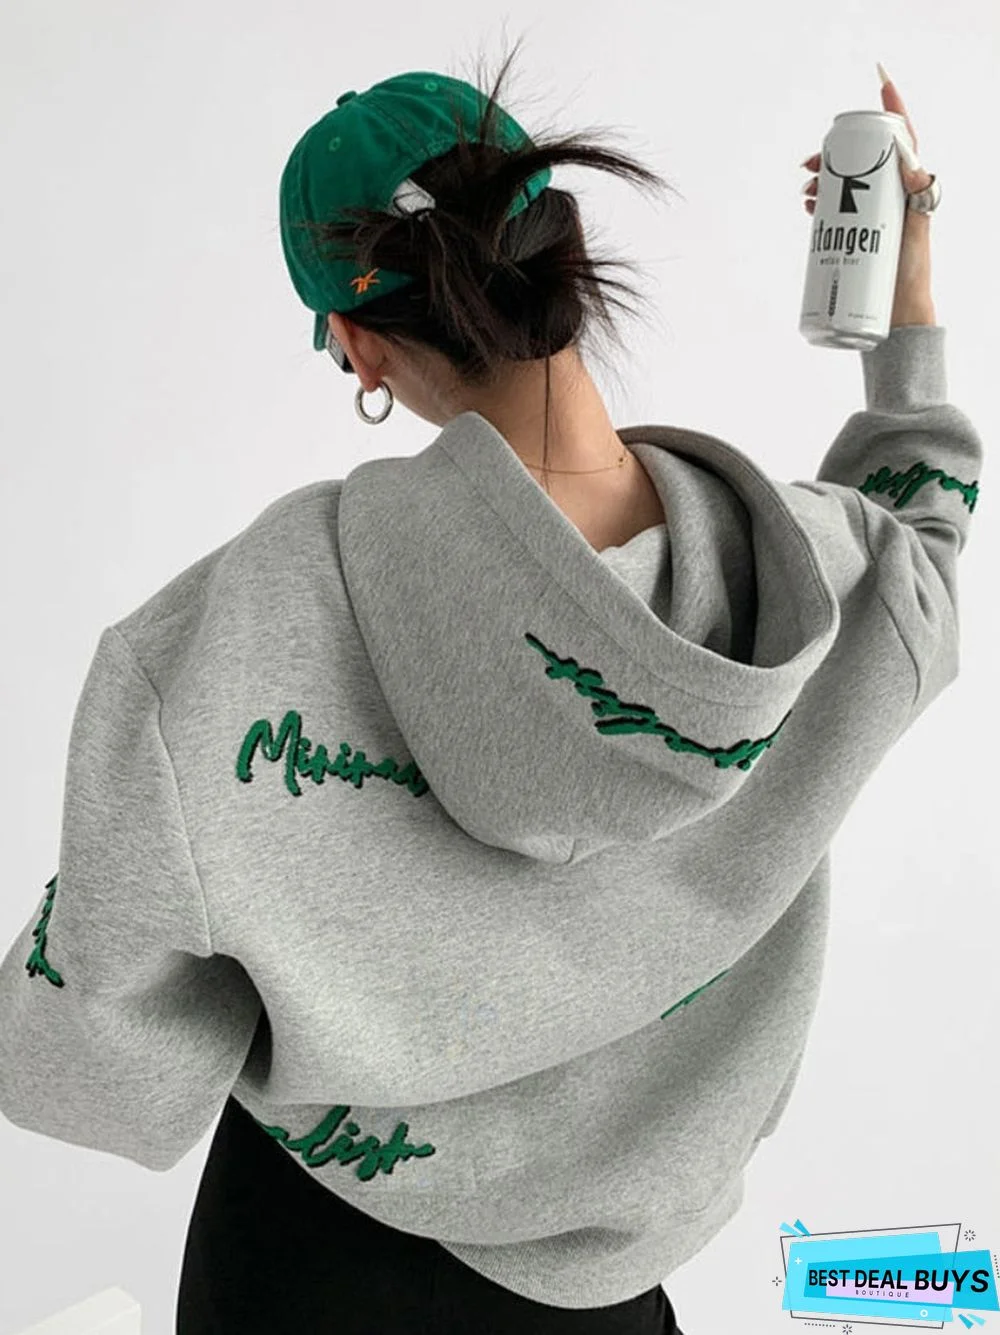 Fashionkova  Vintage Gray Oversize Hoodies Women Harajuku Hip Hop Embroidery Loose Sweatshirts Long Sleeve Casual Tops Grunge Korean